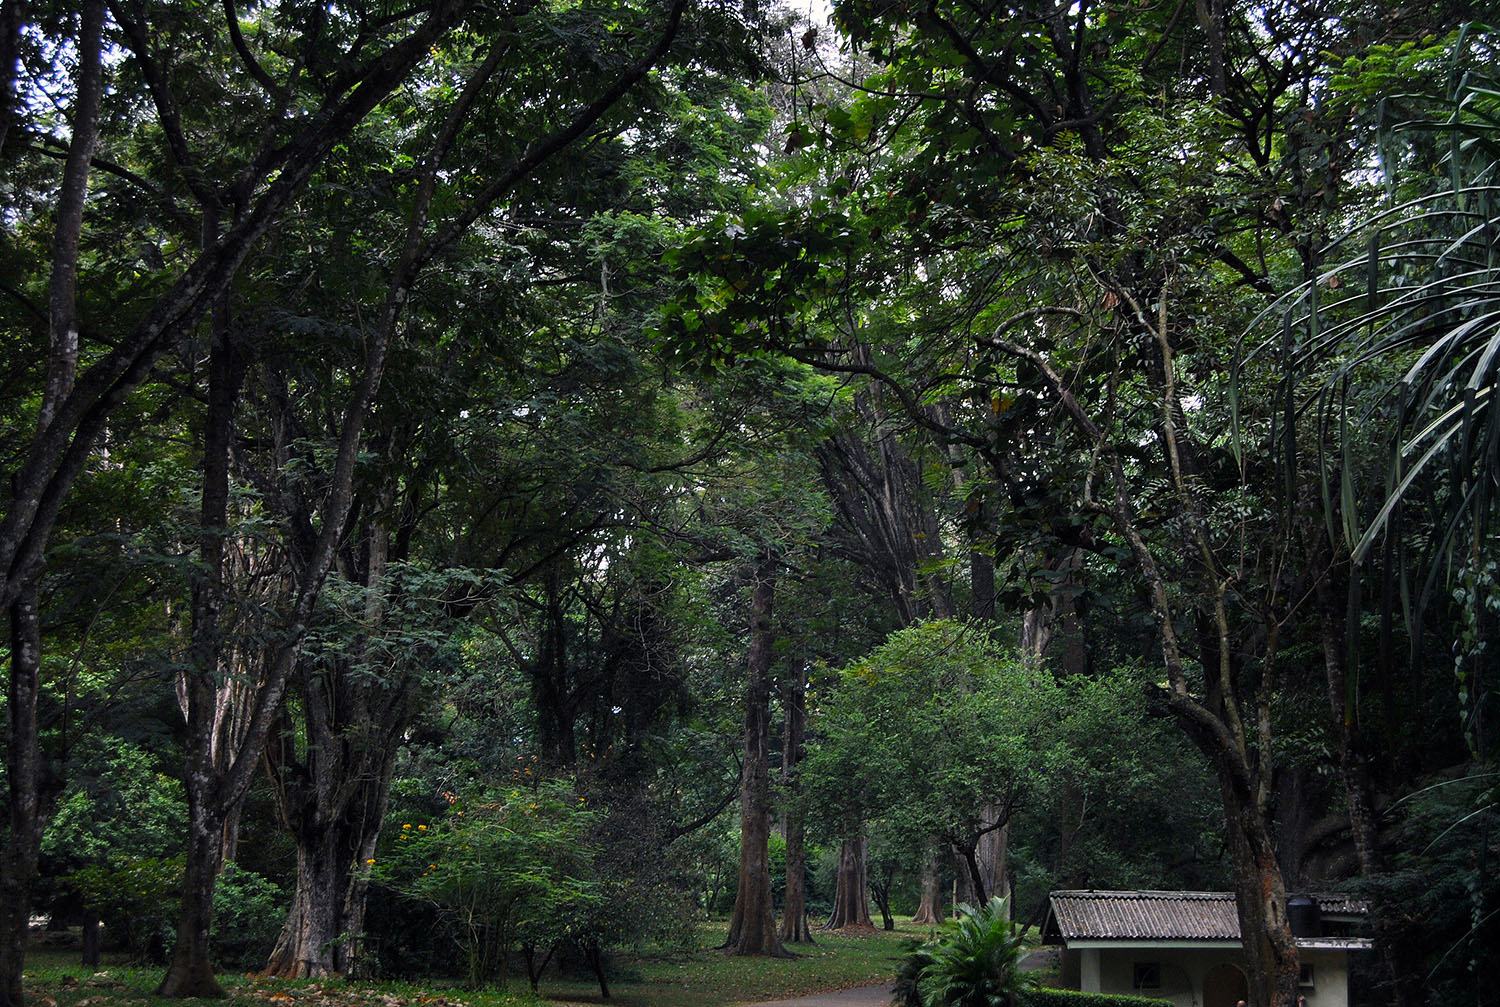 Royal Botanical Garden, Kandy, Sri Lanka